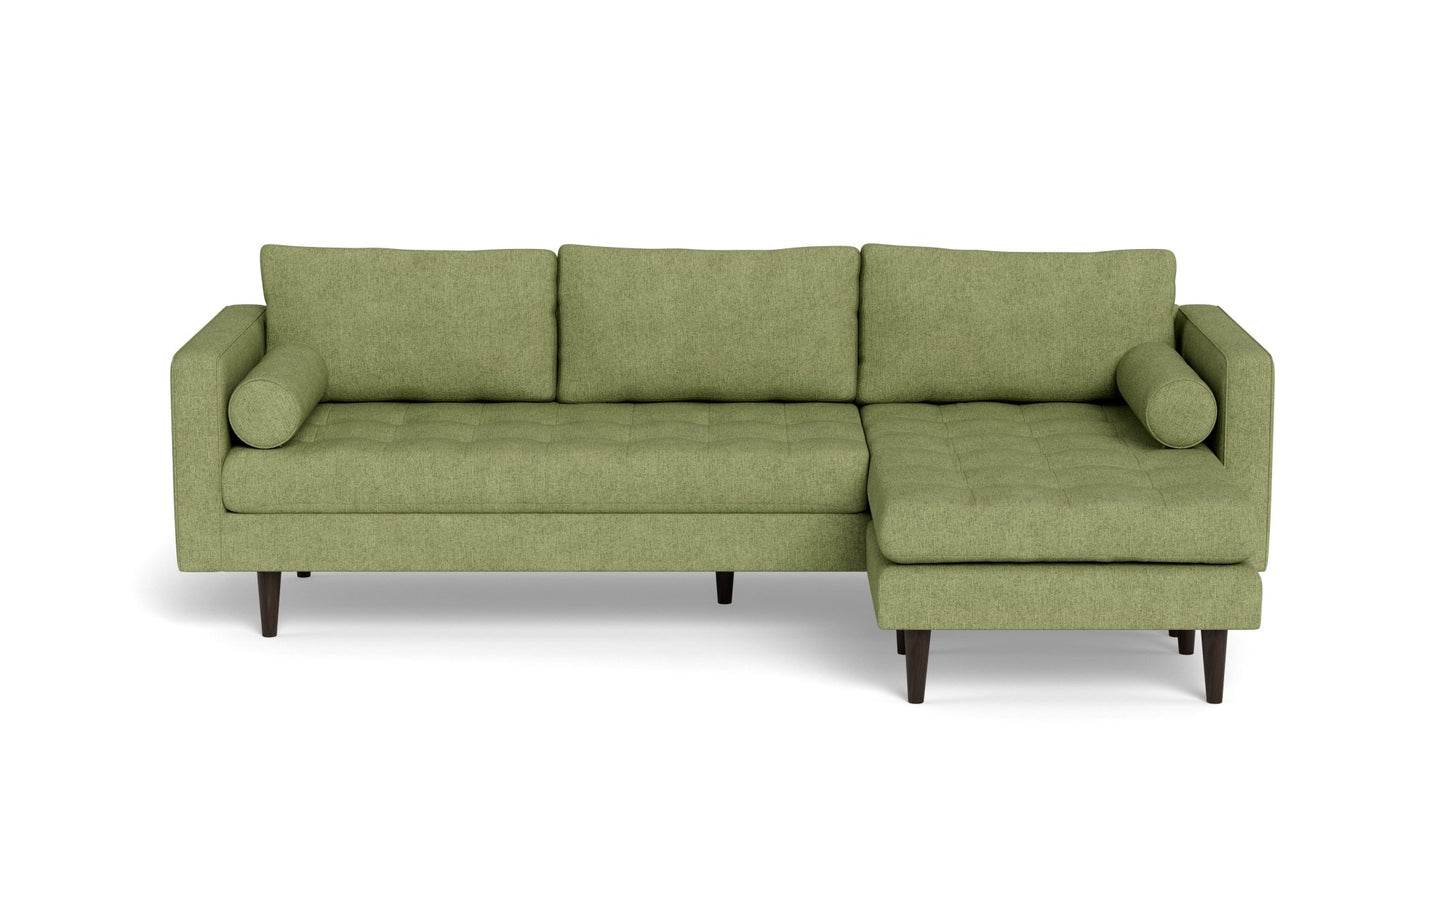 Ladybird Reversible Sofa Chaise